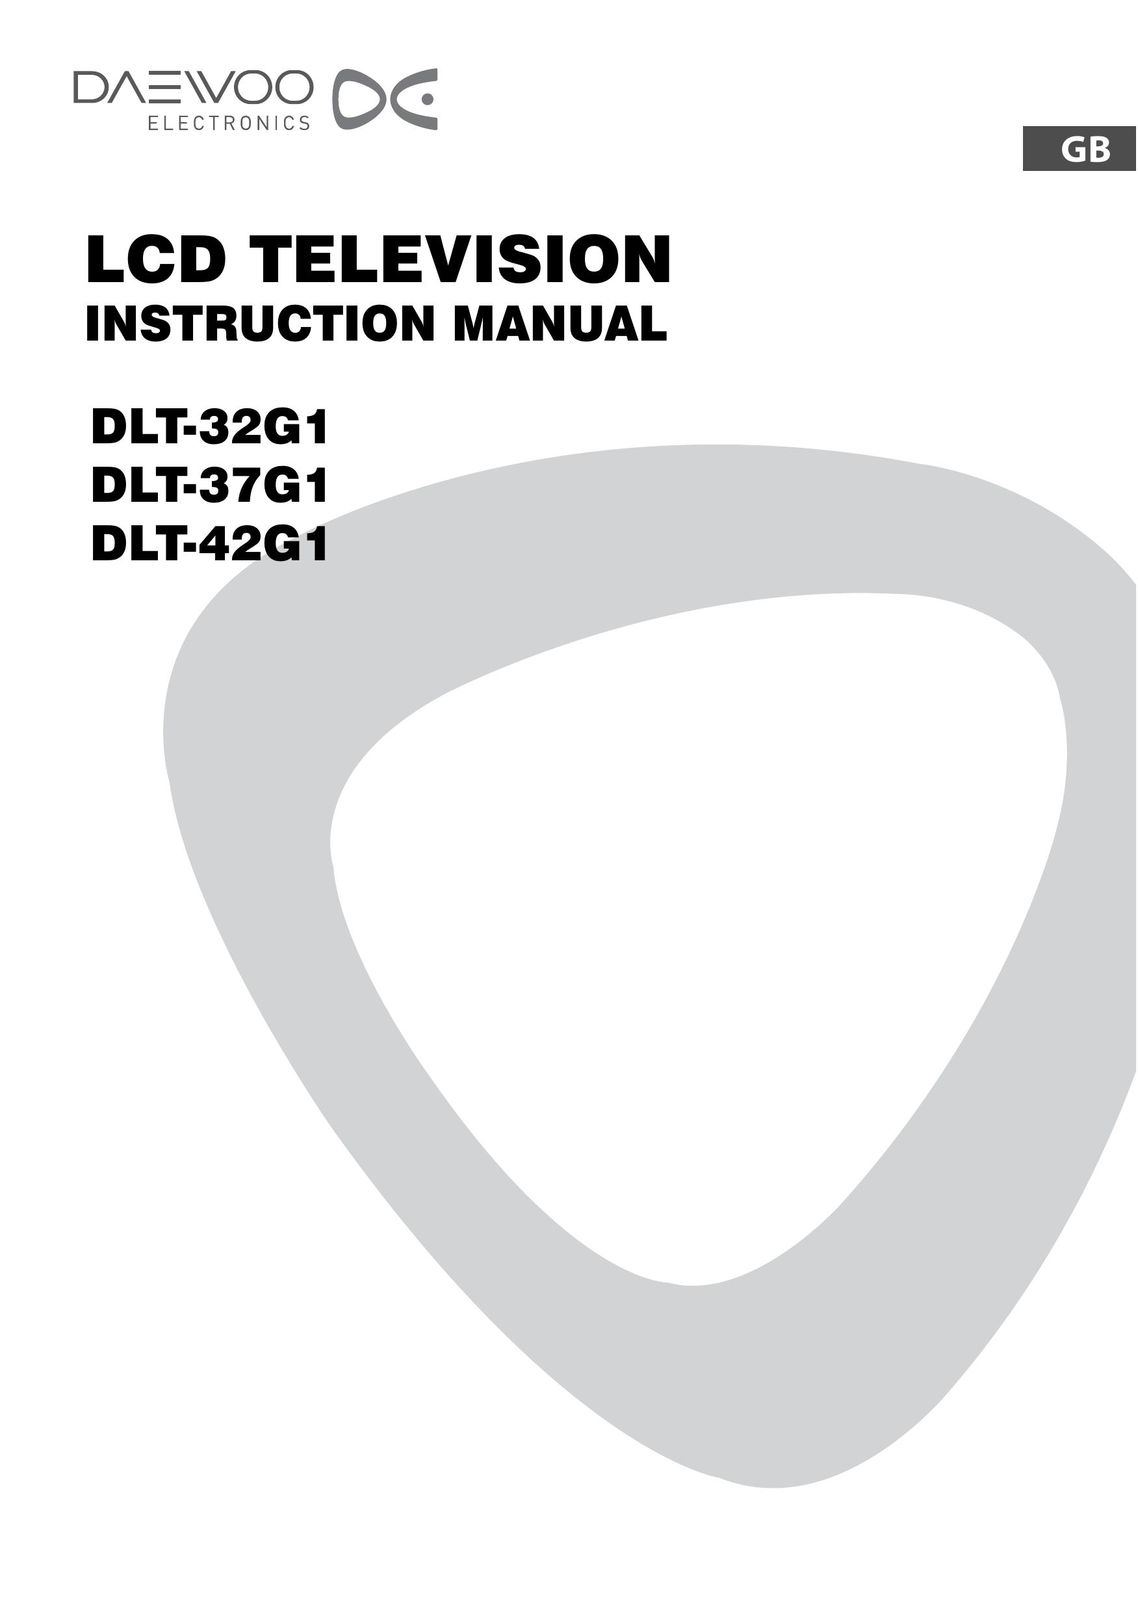 Daewoo DLT-42G1 Flat Panel Television User Manual